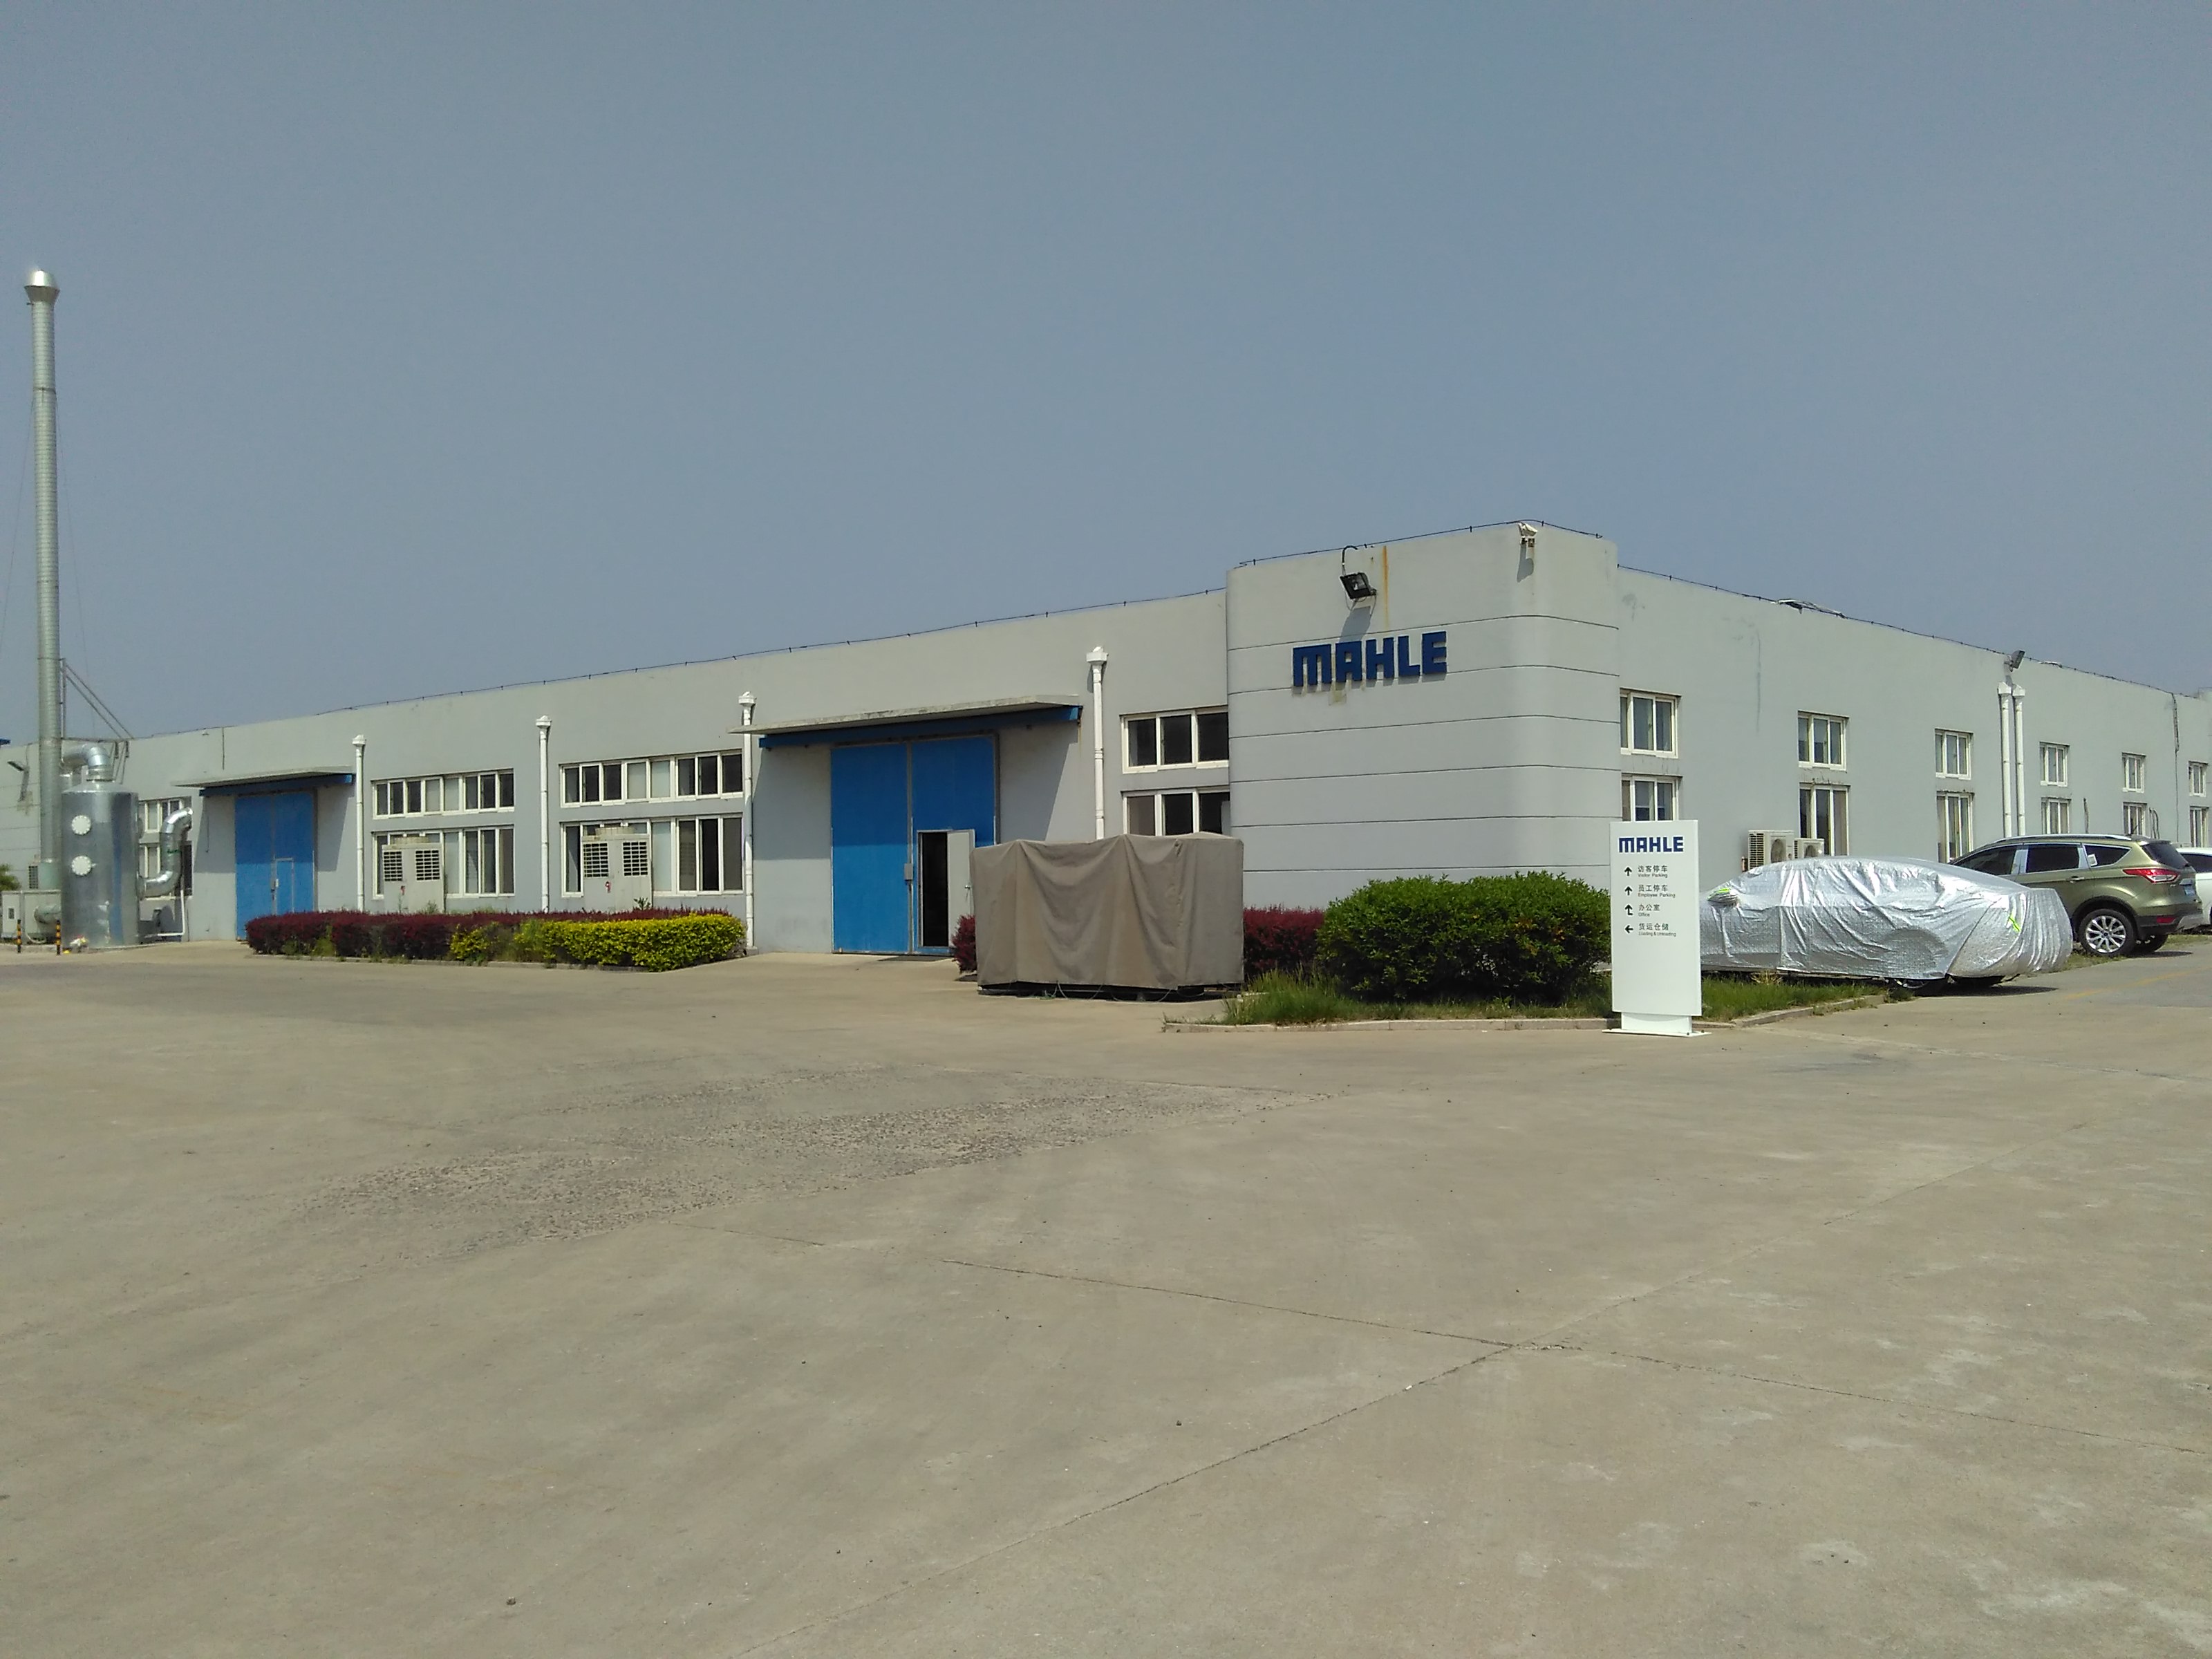 MAHLE Behr Thermal Systems (Qingdao) Co., Ltd., Qingdao